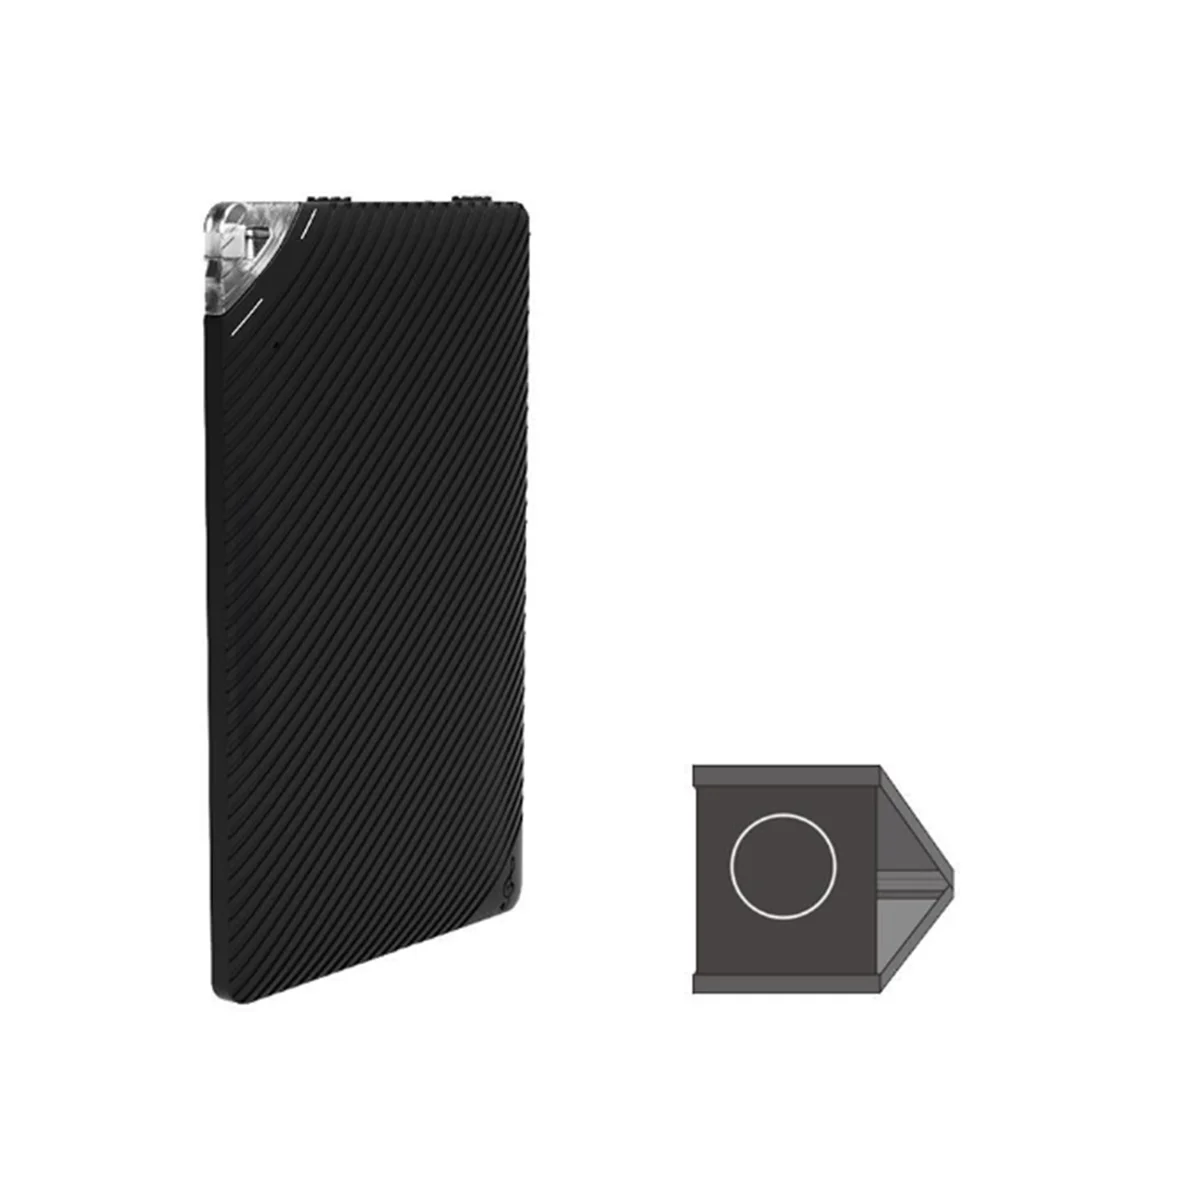 

Bone Conduction Speaker Wirelessly Bluetooth Speakers Mini Portable Loud Stereo Sound Built-in Mic Sound Box(Black)